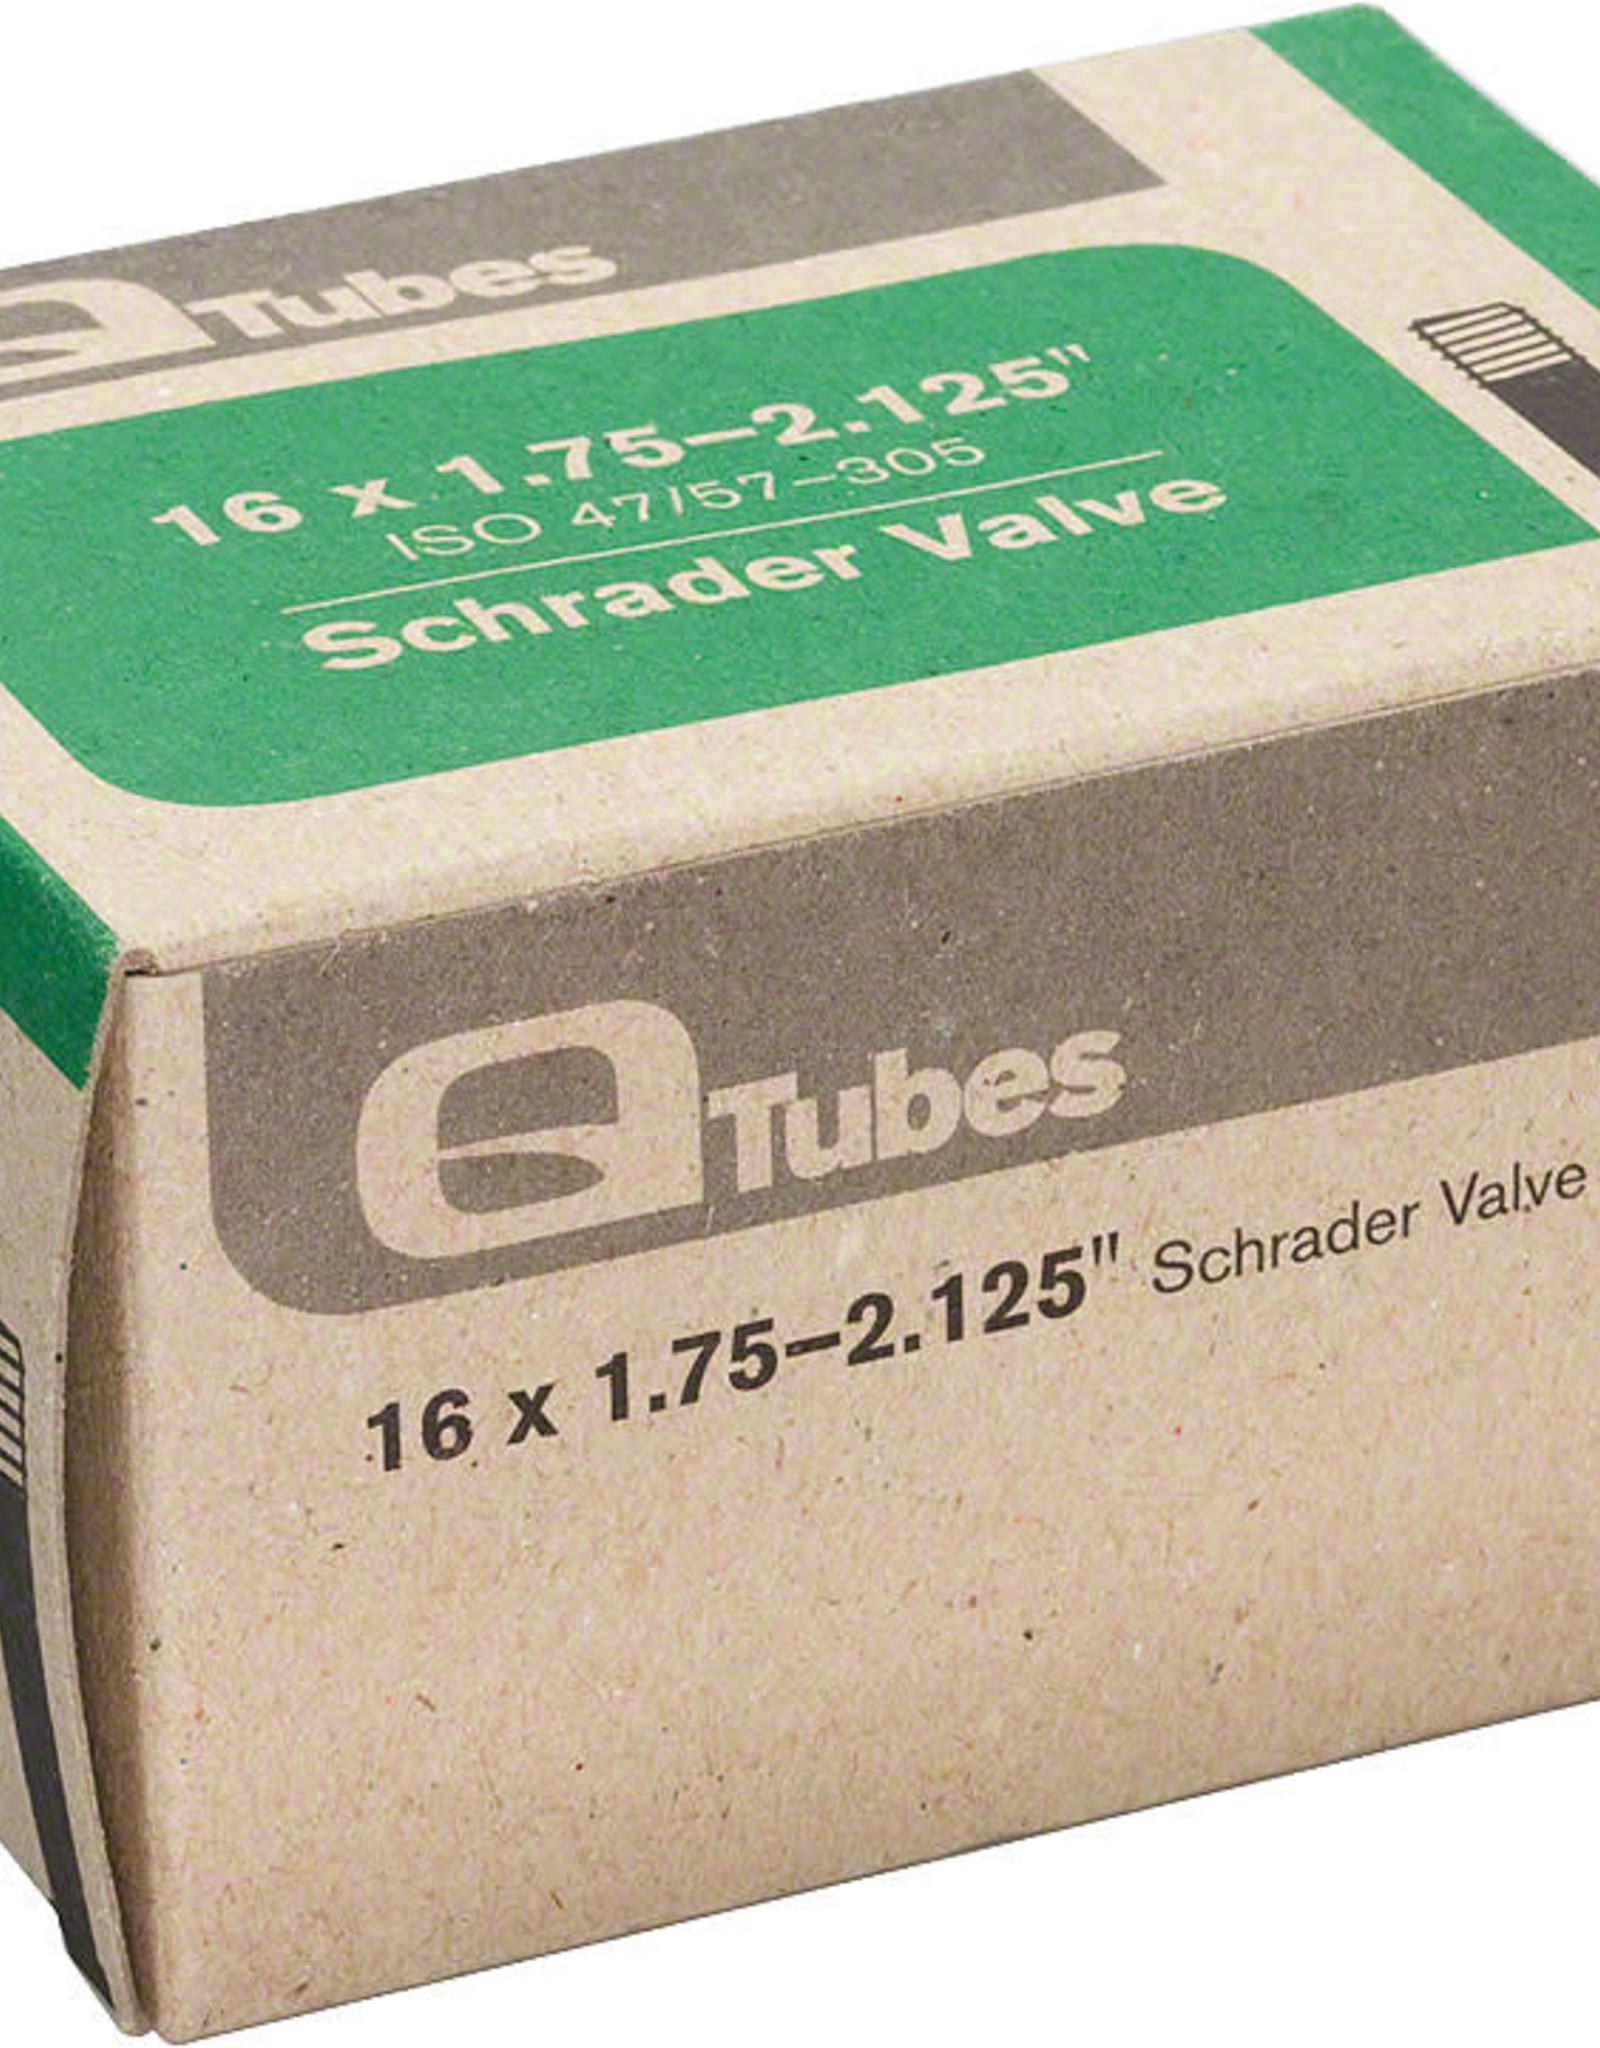 Q-Tubes Q-Tubes / Teravail 16" x 1.75-2.125" Schrader Valve Tube 102g *Low Lead Valve*